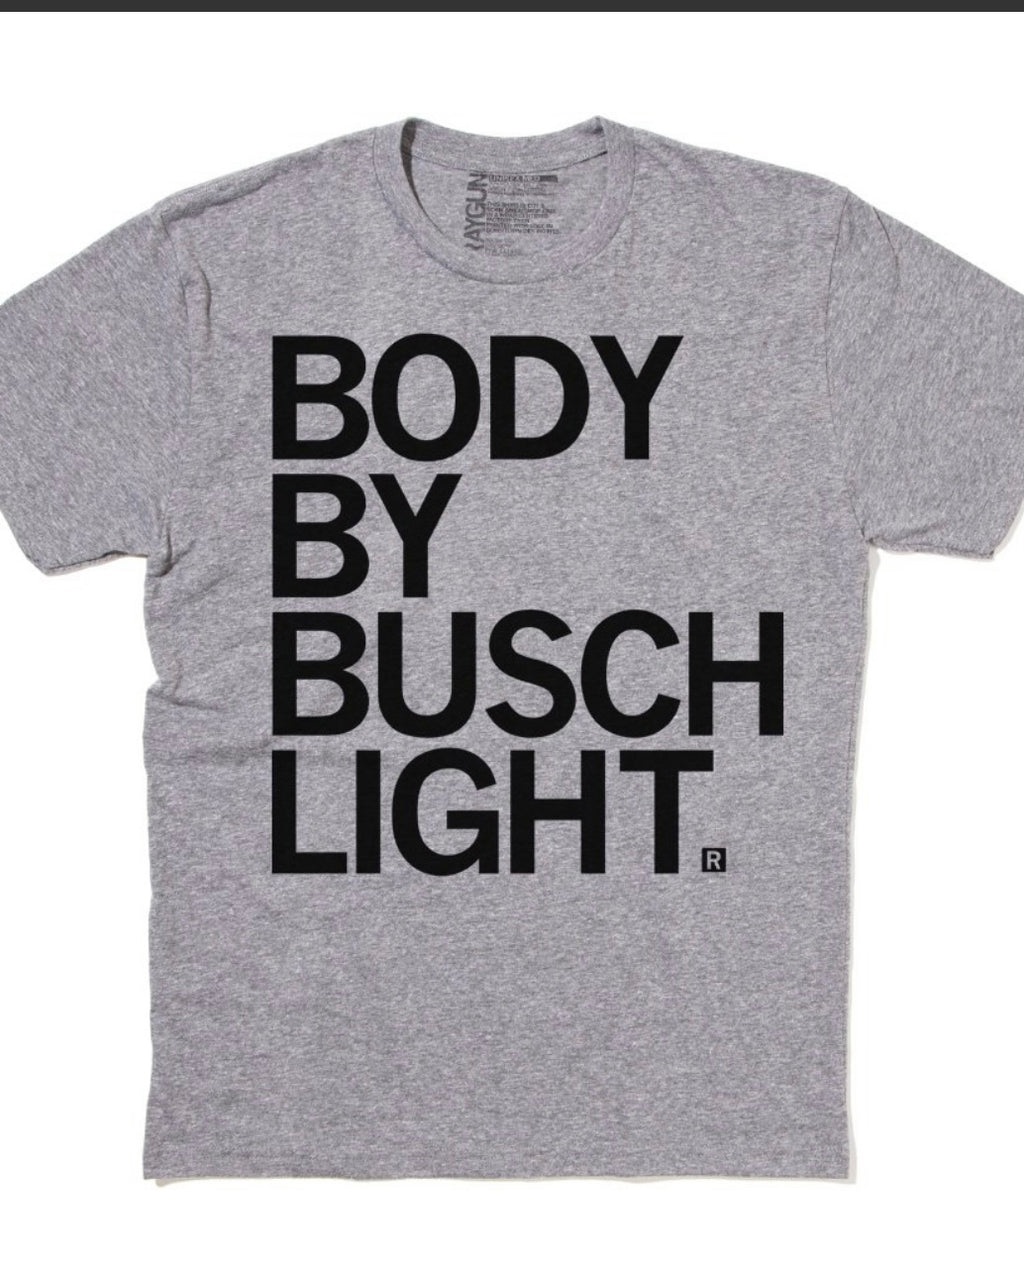 Body By Bush Light